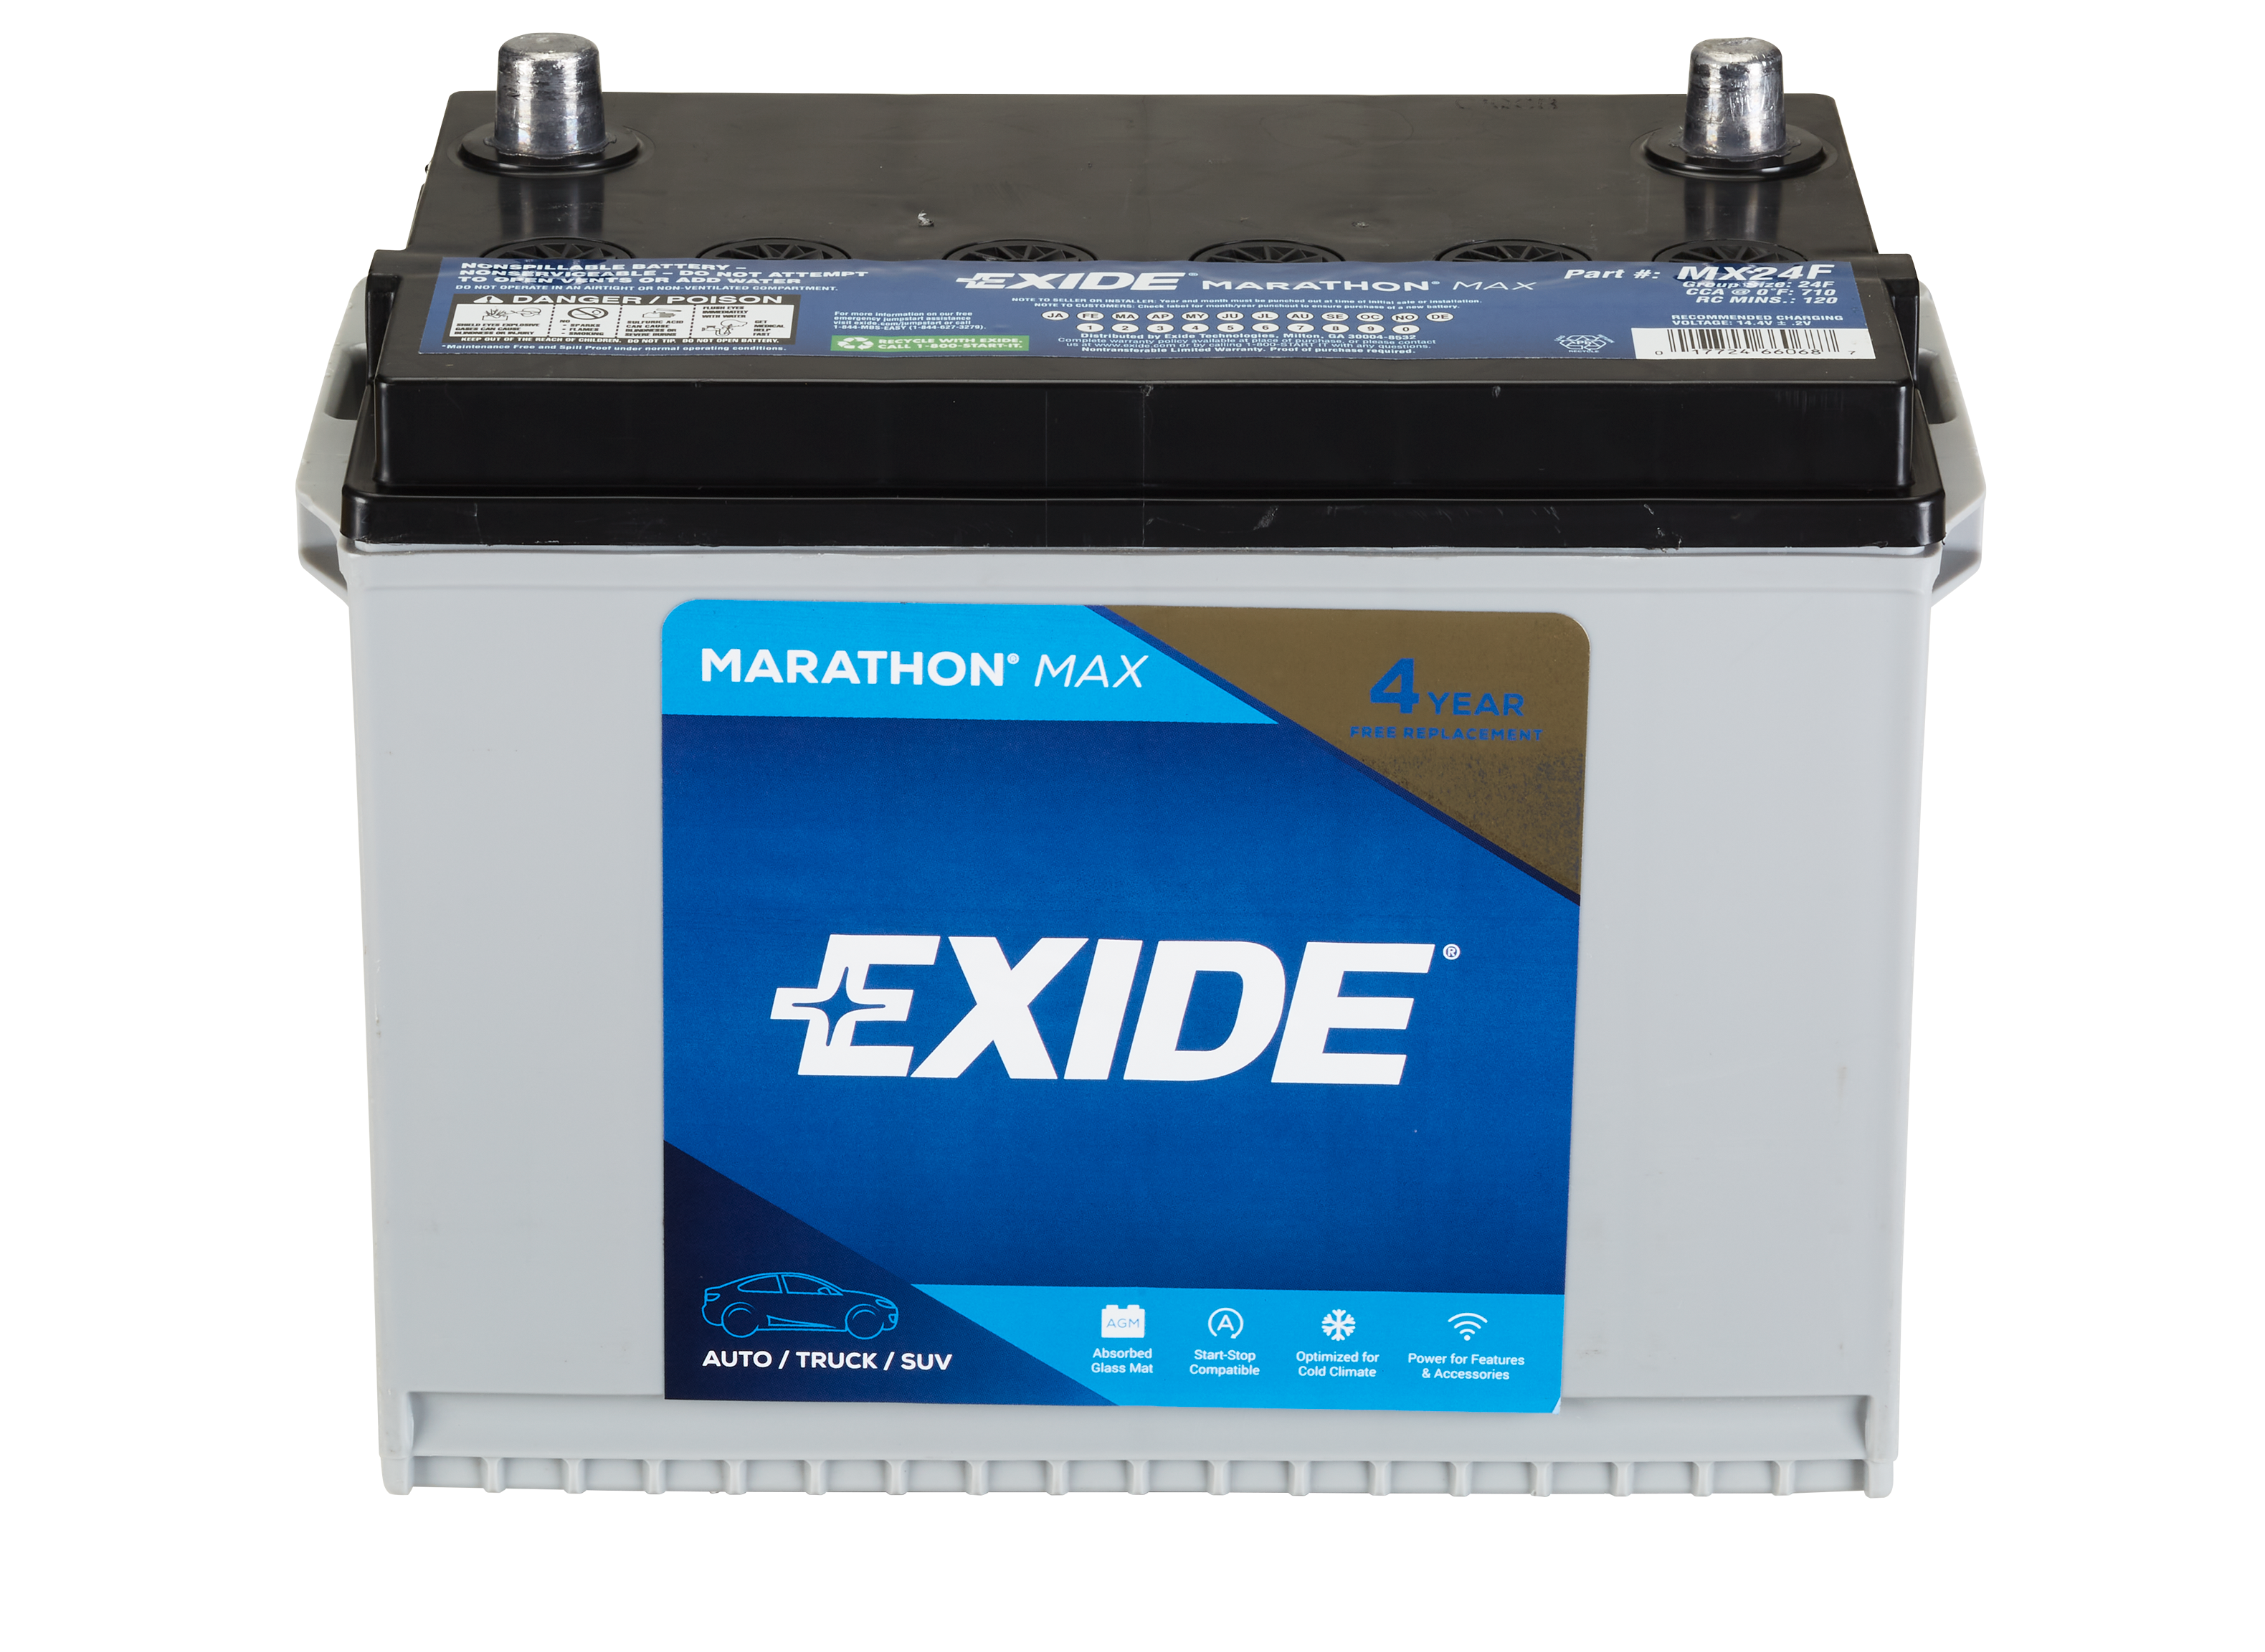 Exide Marathon Max AGM MX24F [FPAGM24F] Car Battery Review